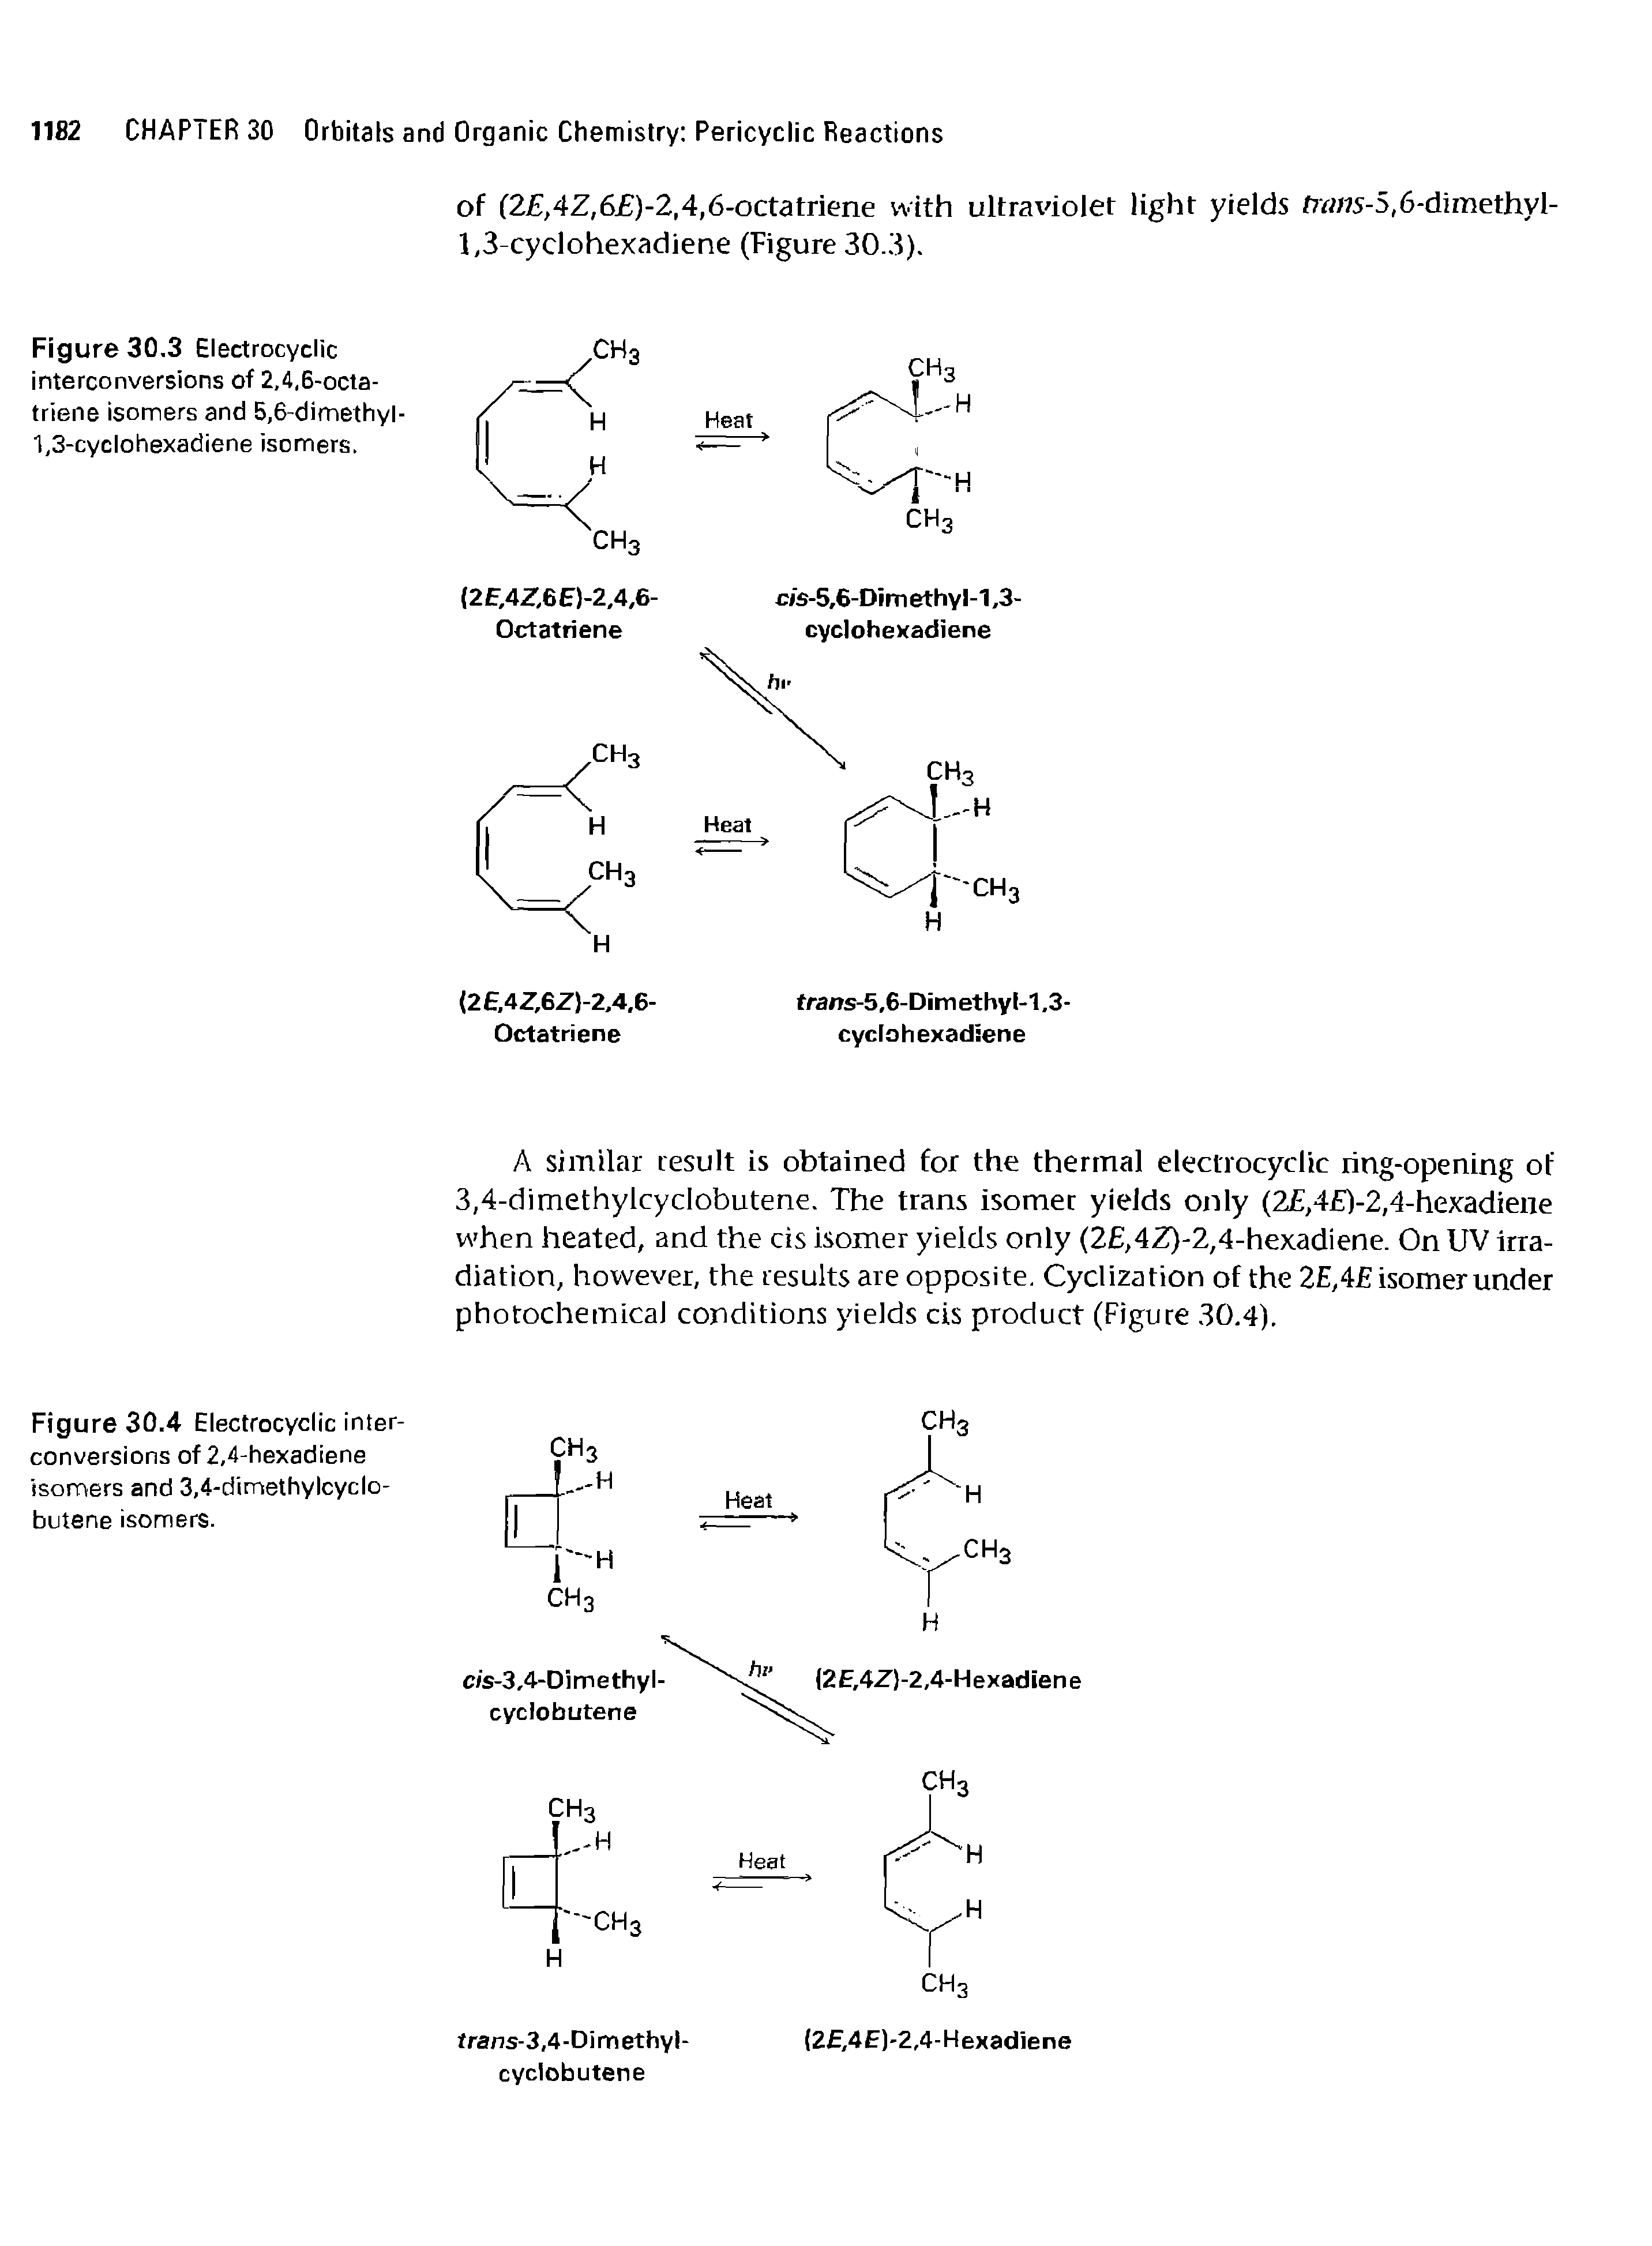 Figure 30.3 Electrocyclic interconversions of 2,4,6-octa-triene isomers and 5,6-dimethyi-1,3-cyclohexadiene isomers.